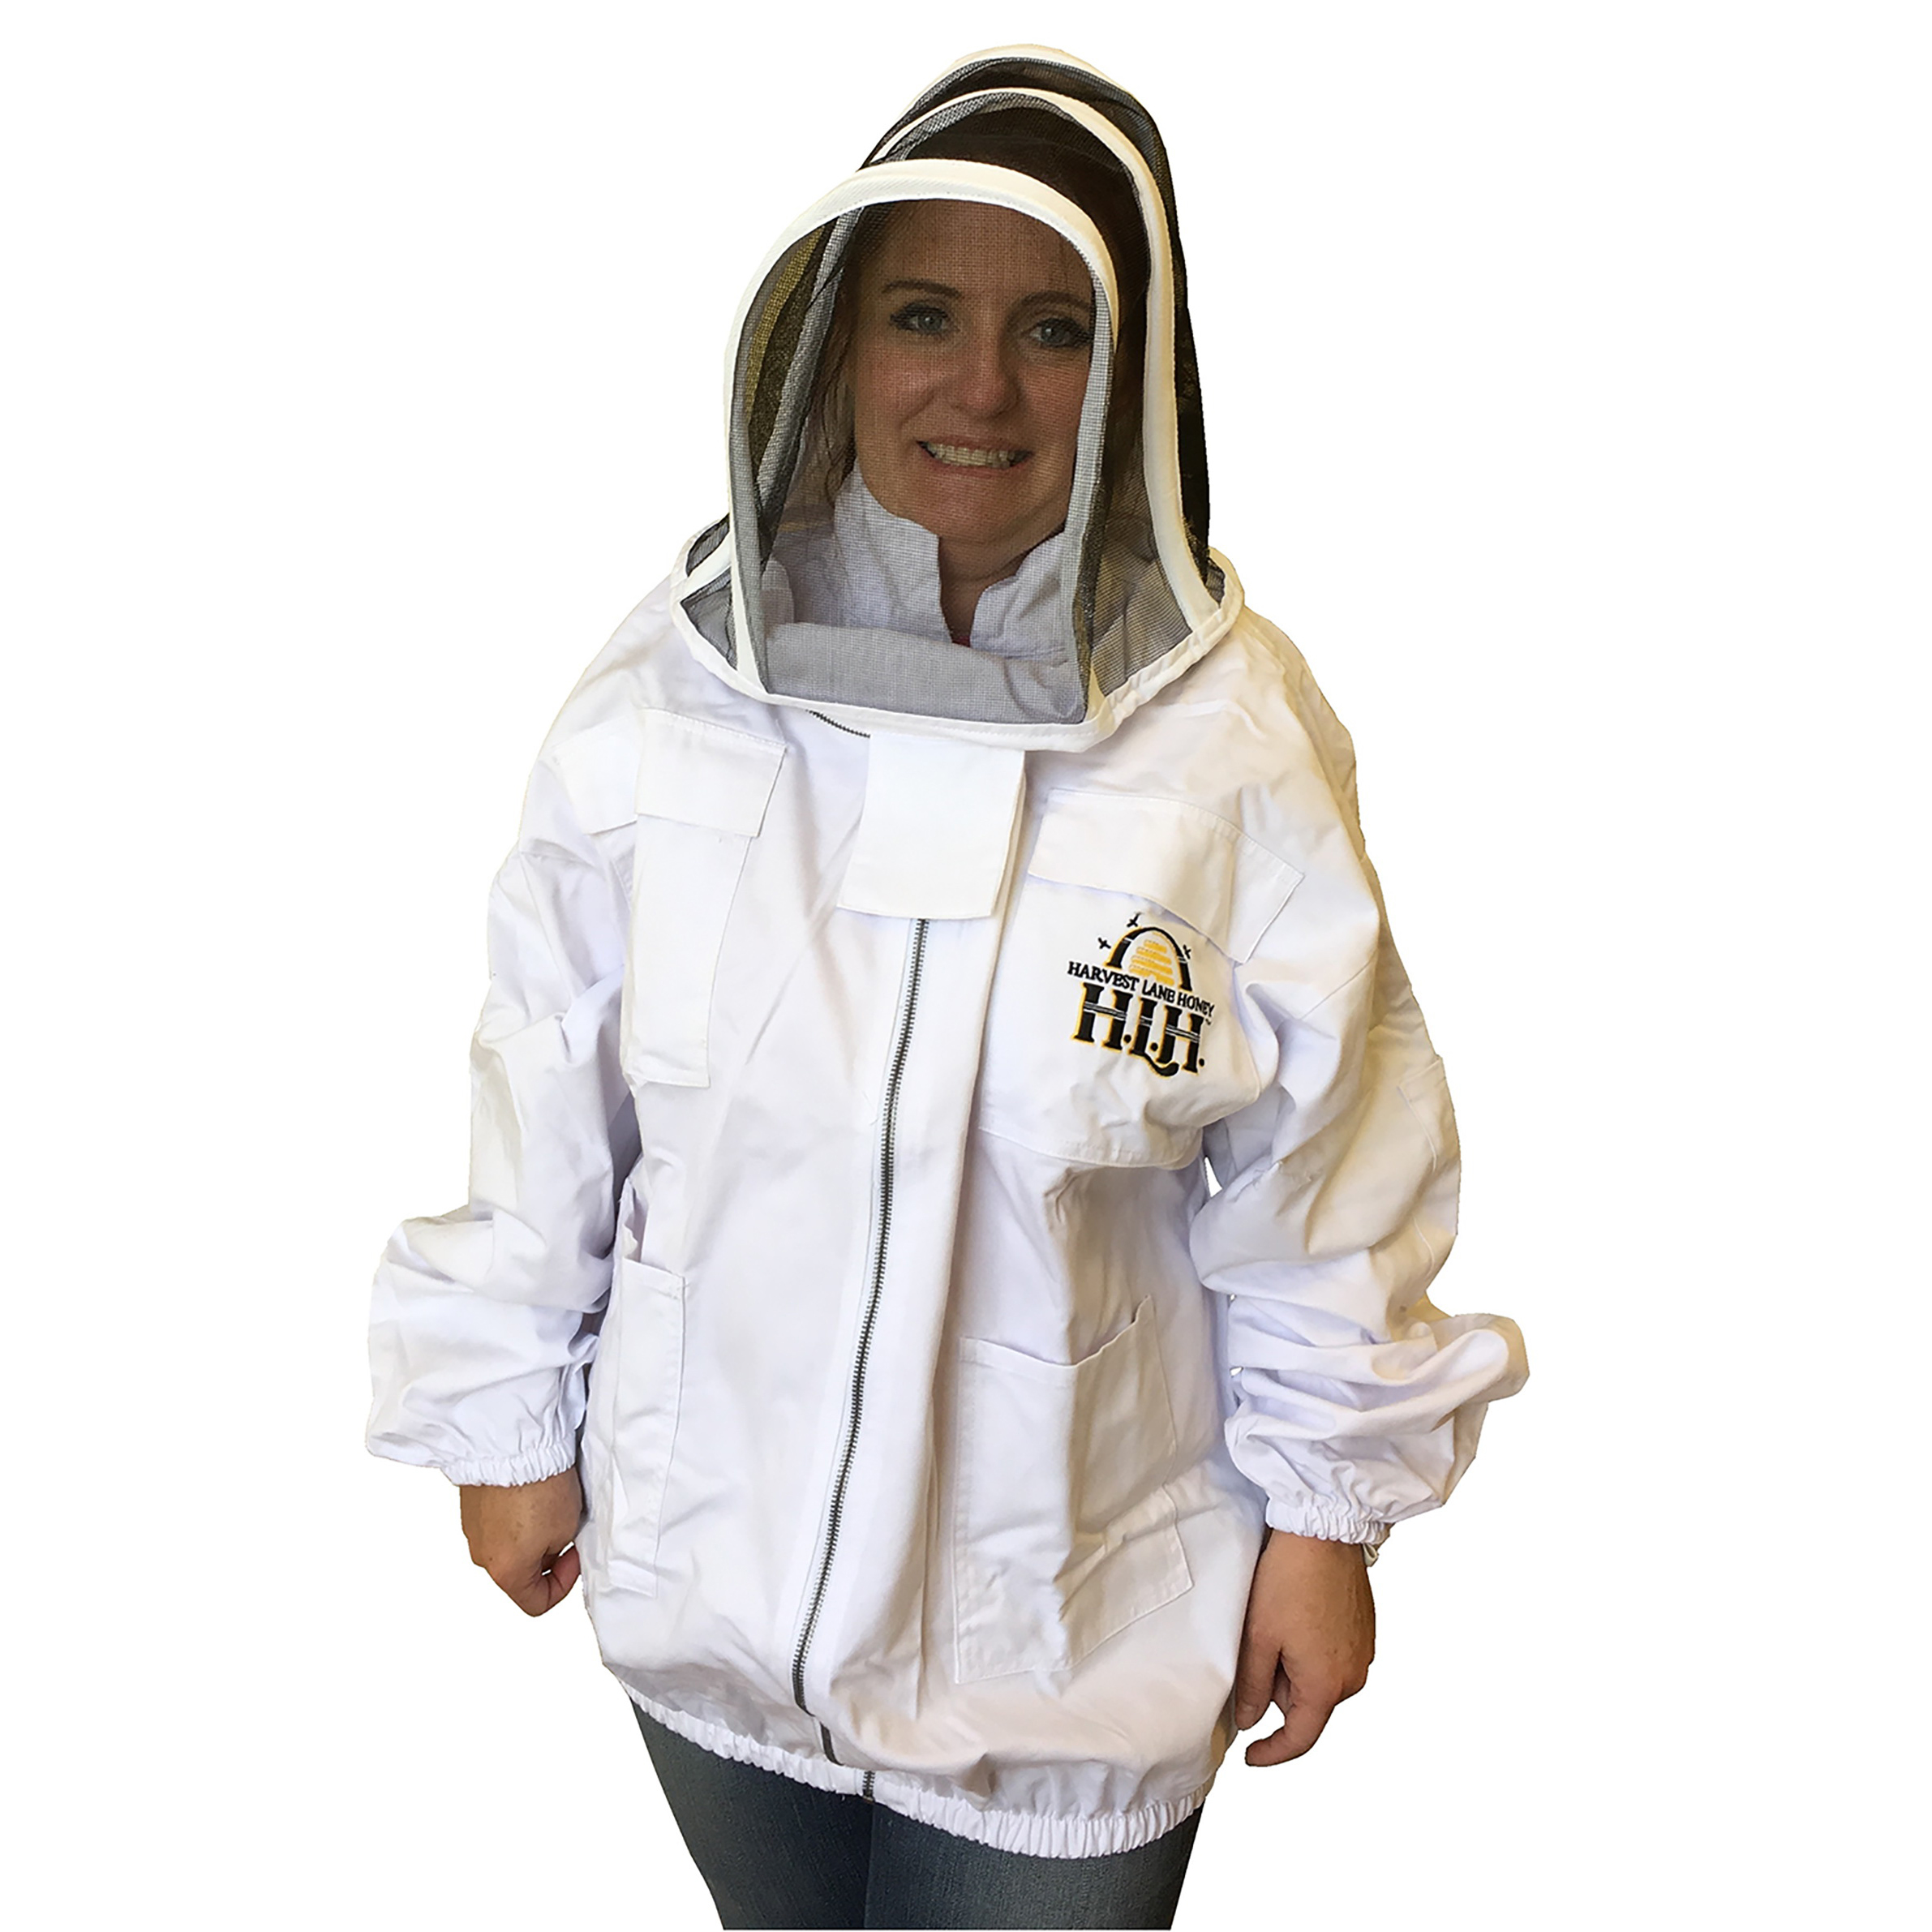 CLOTHSJXXL-102 Beekeeper Jacket with Hood, 2XL, Zipper Closure, Polycotton, White